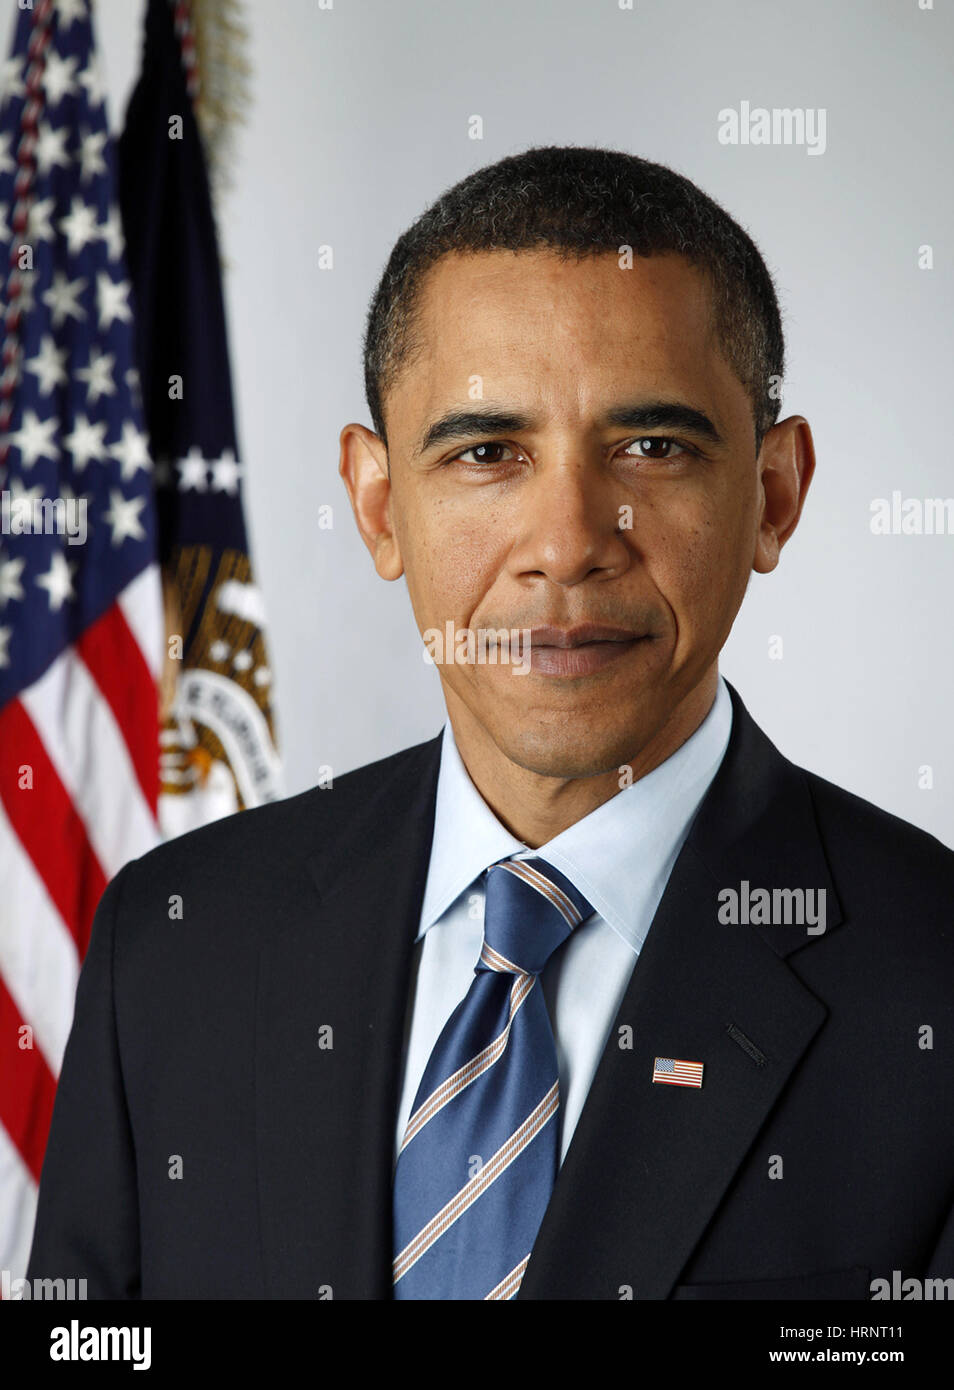 Barack Obama, 44th U.S. President Stock Photo